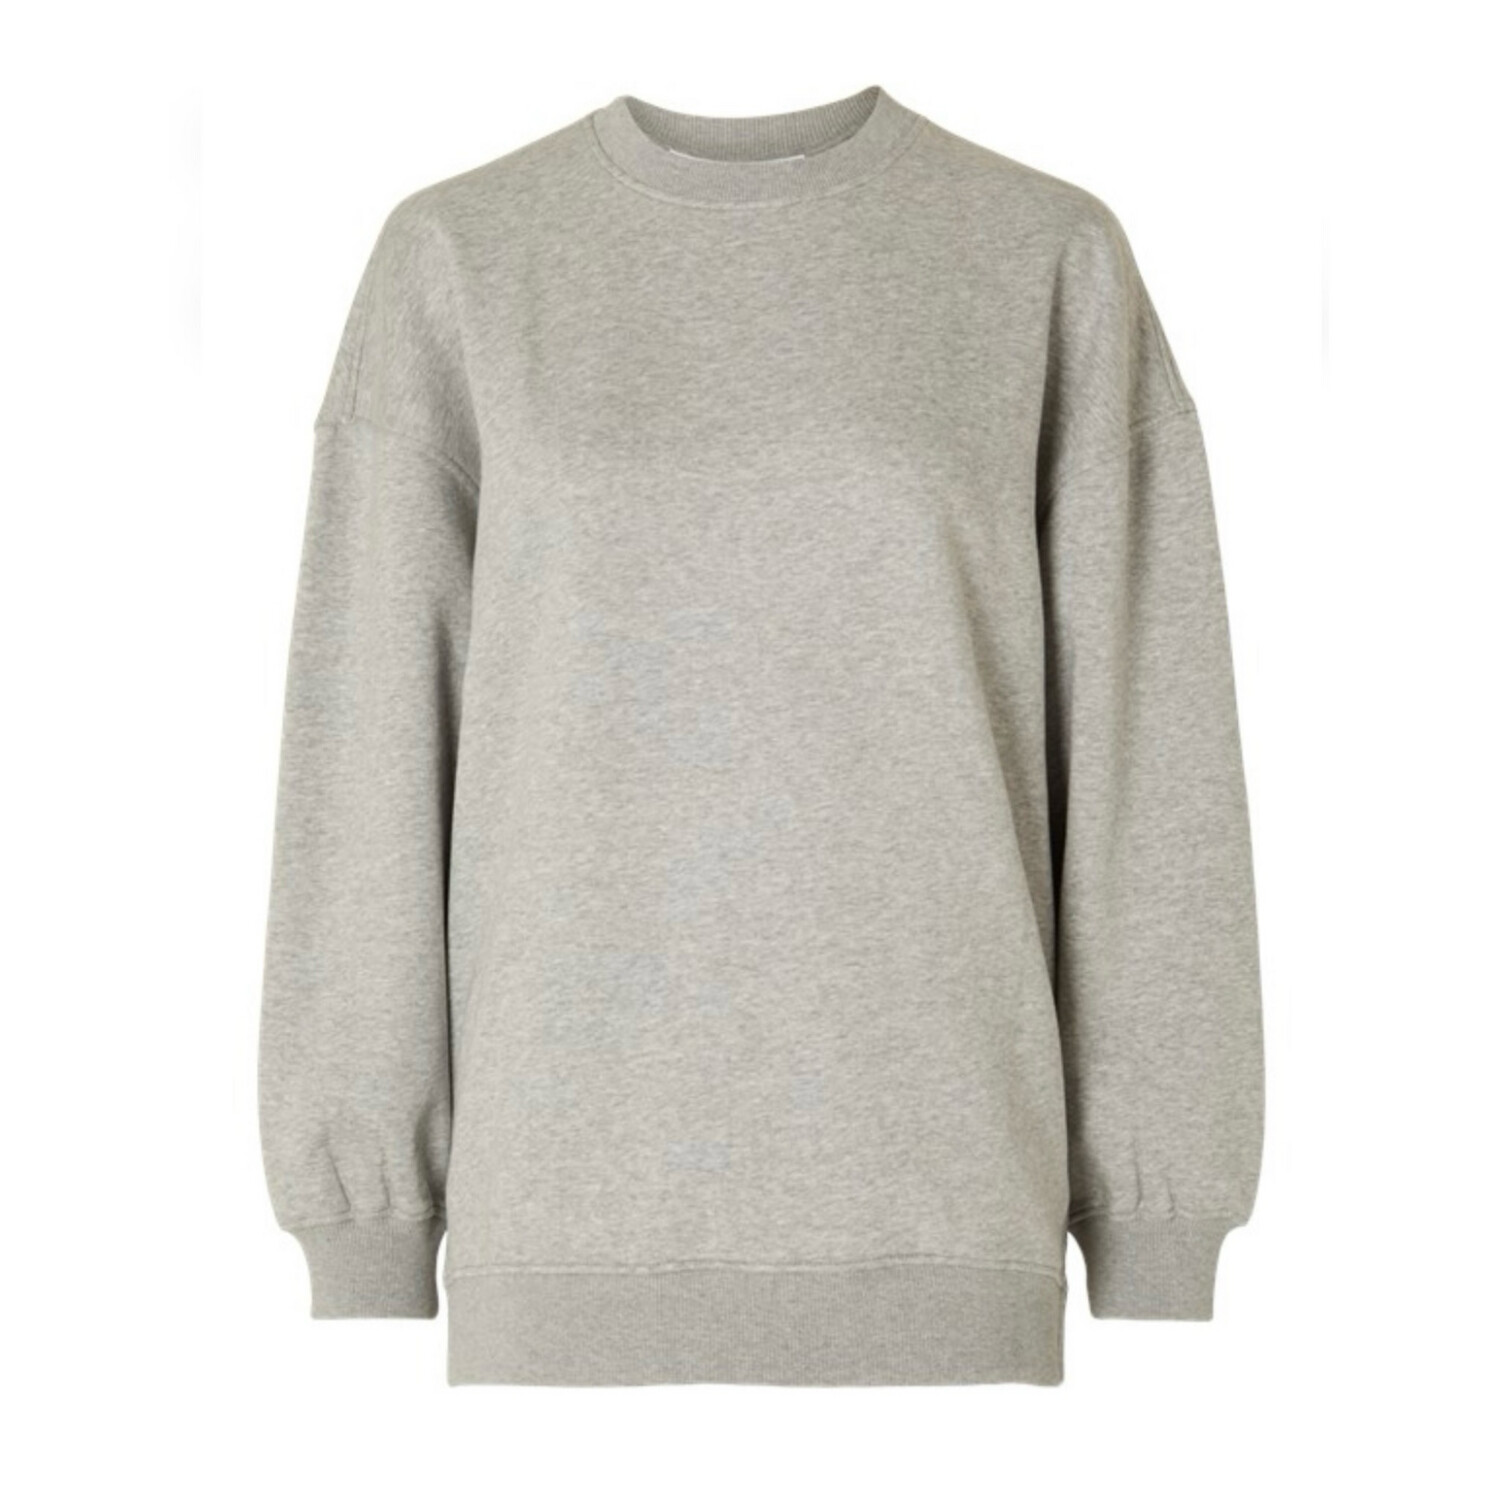 Gia Light Grey Melange Sweater